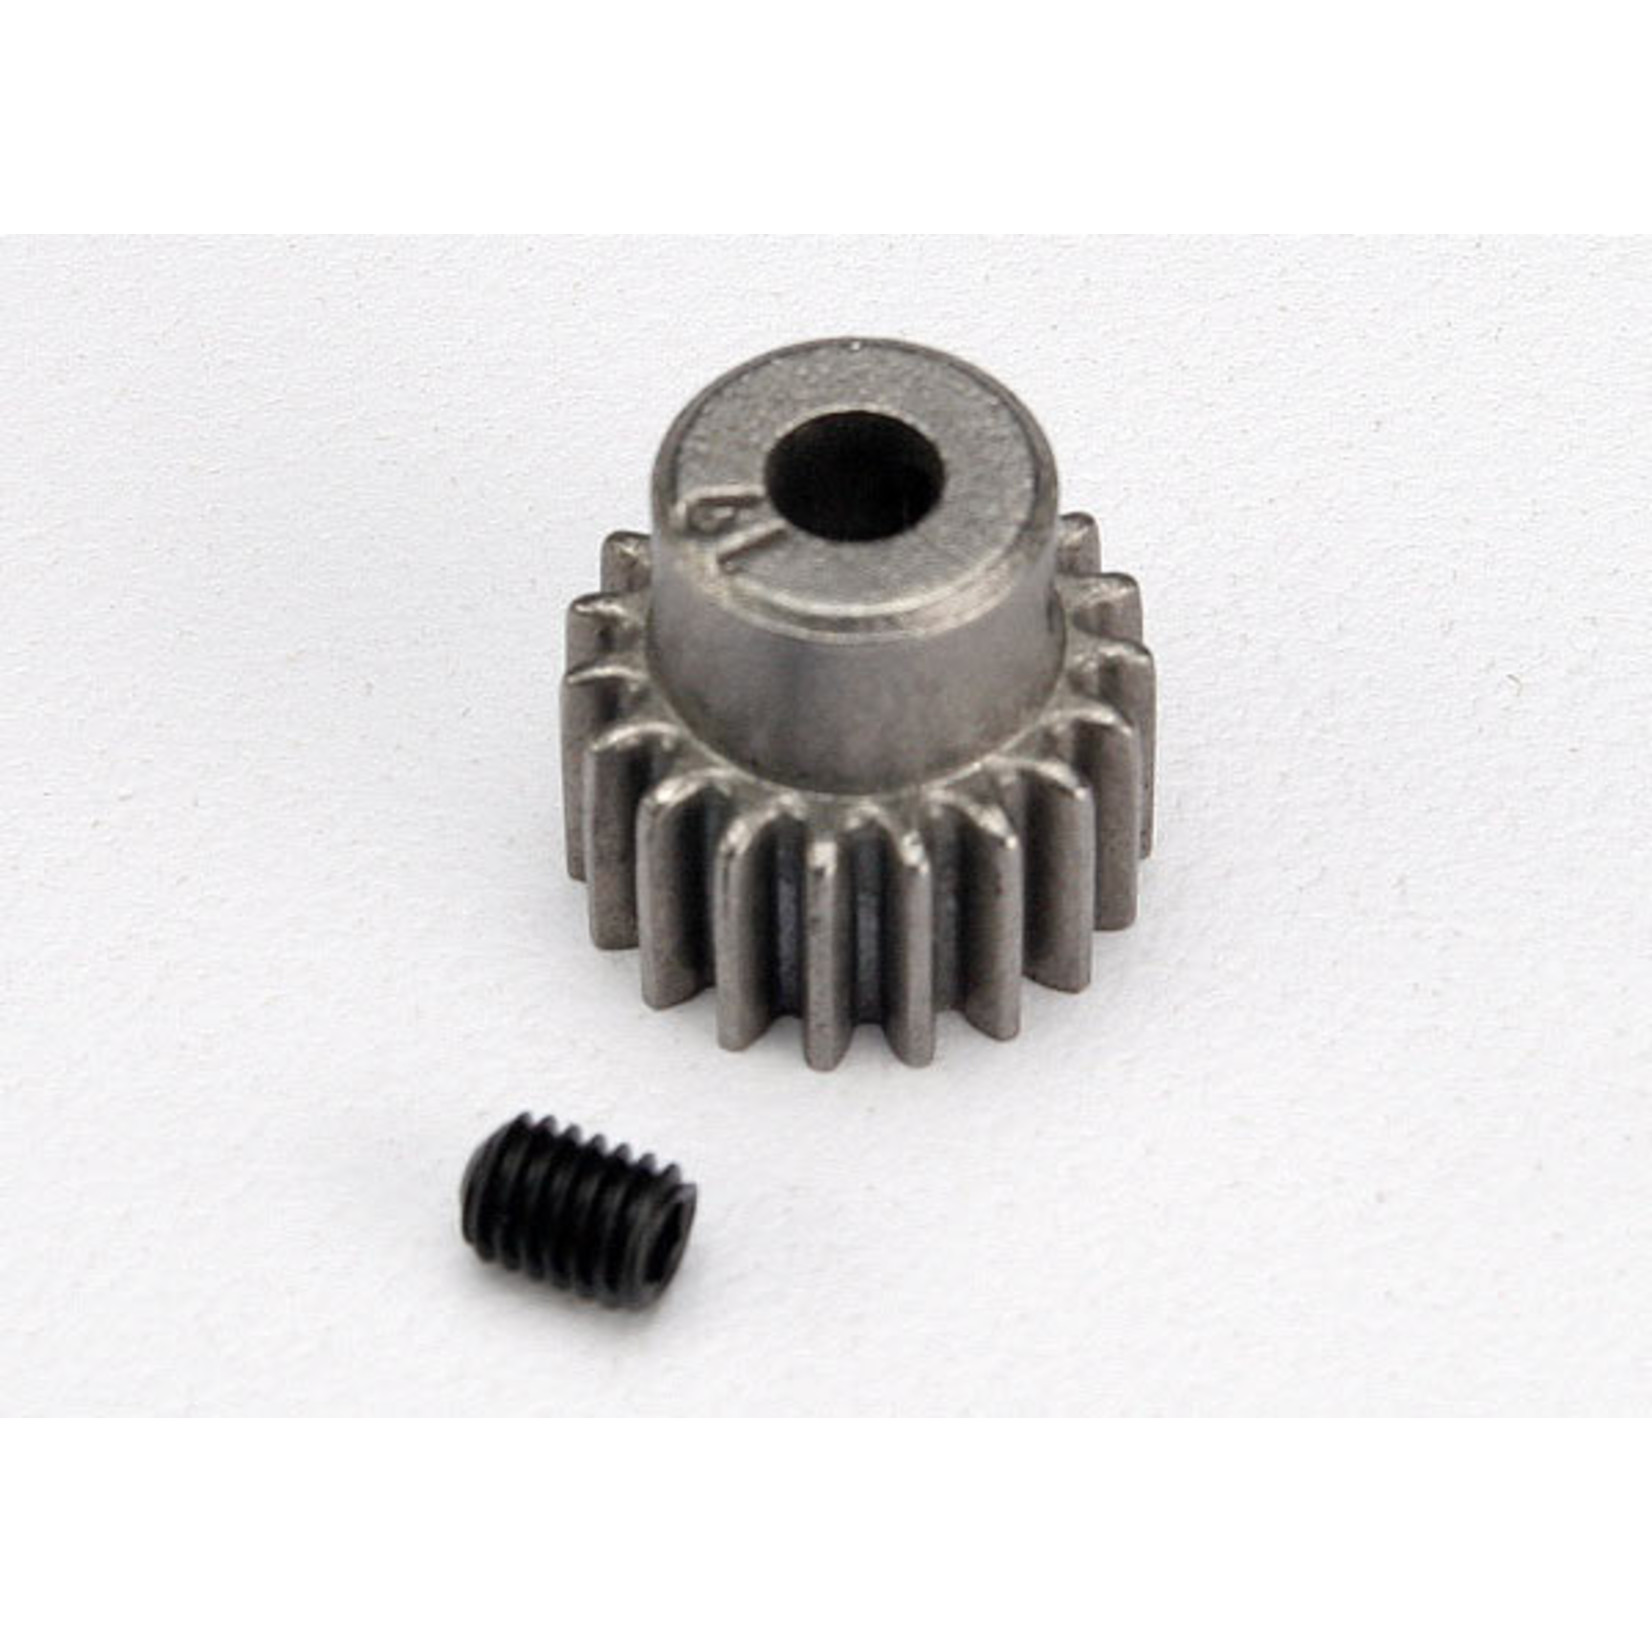 Traxxas 2419 - Gear, 19-T pinion (48-pitch) / set screw